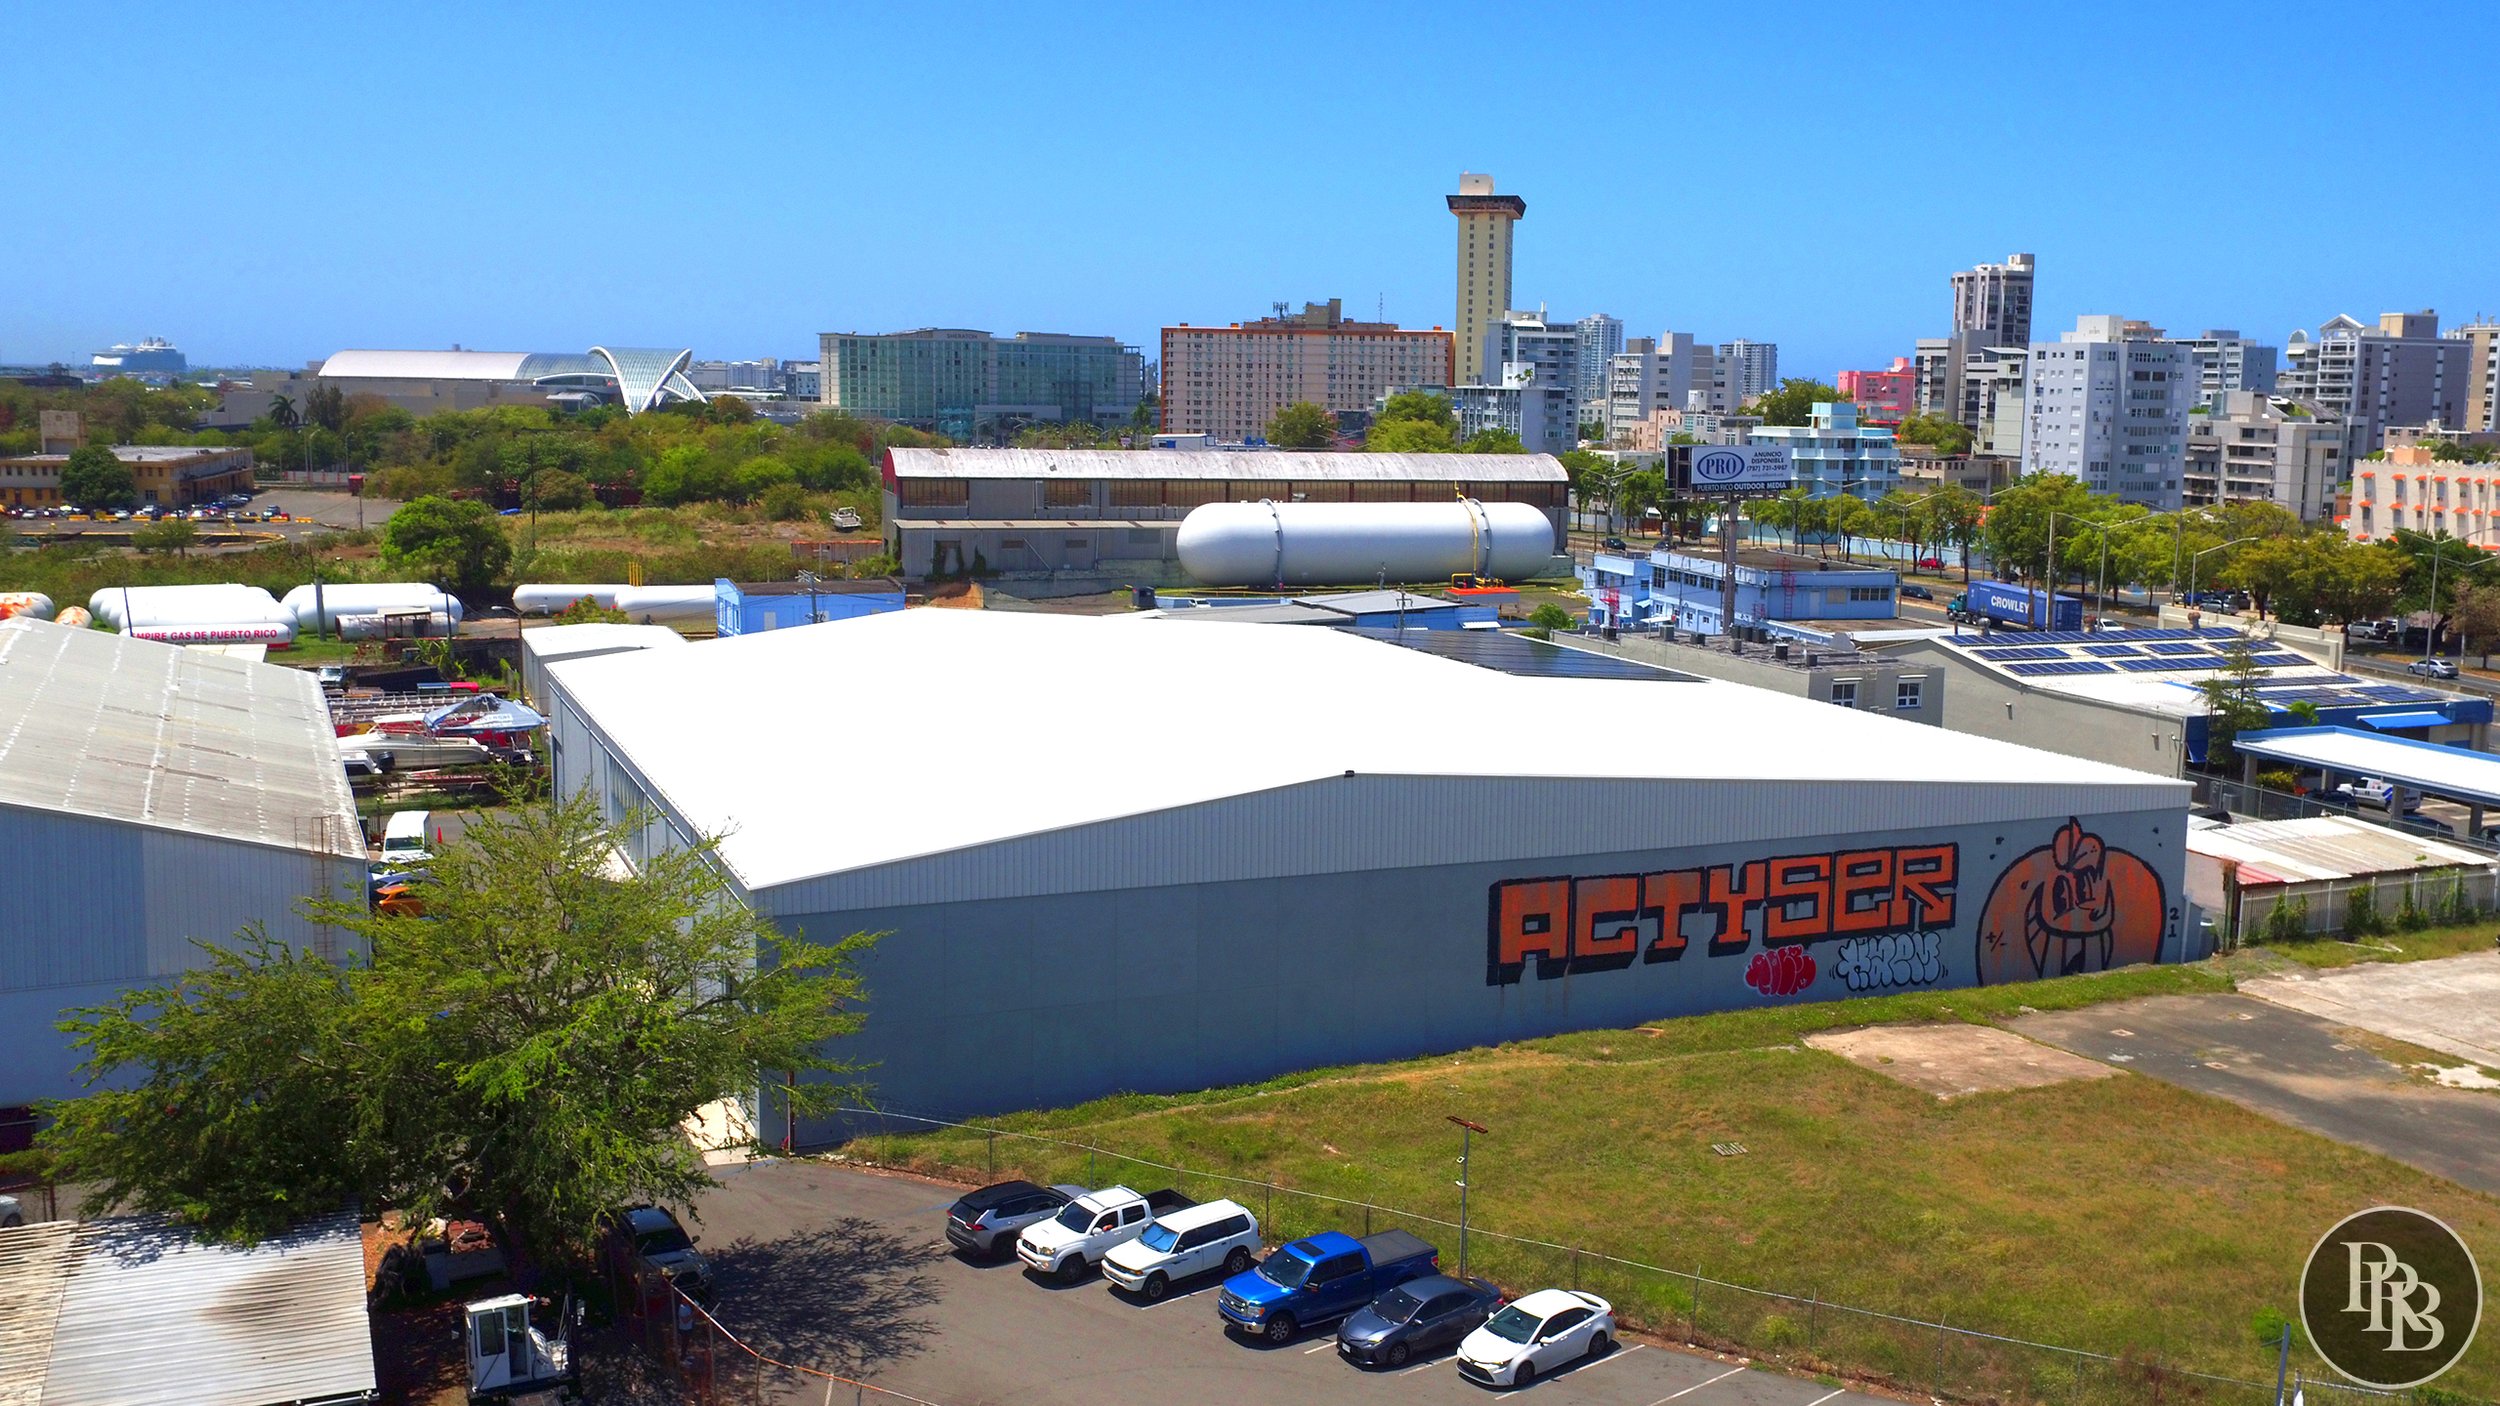 Miramar 41,000 sqft warehouse PRB logo #9.jpg